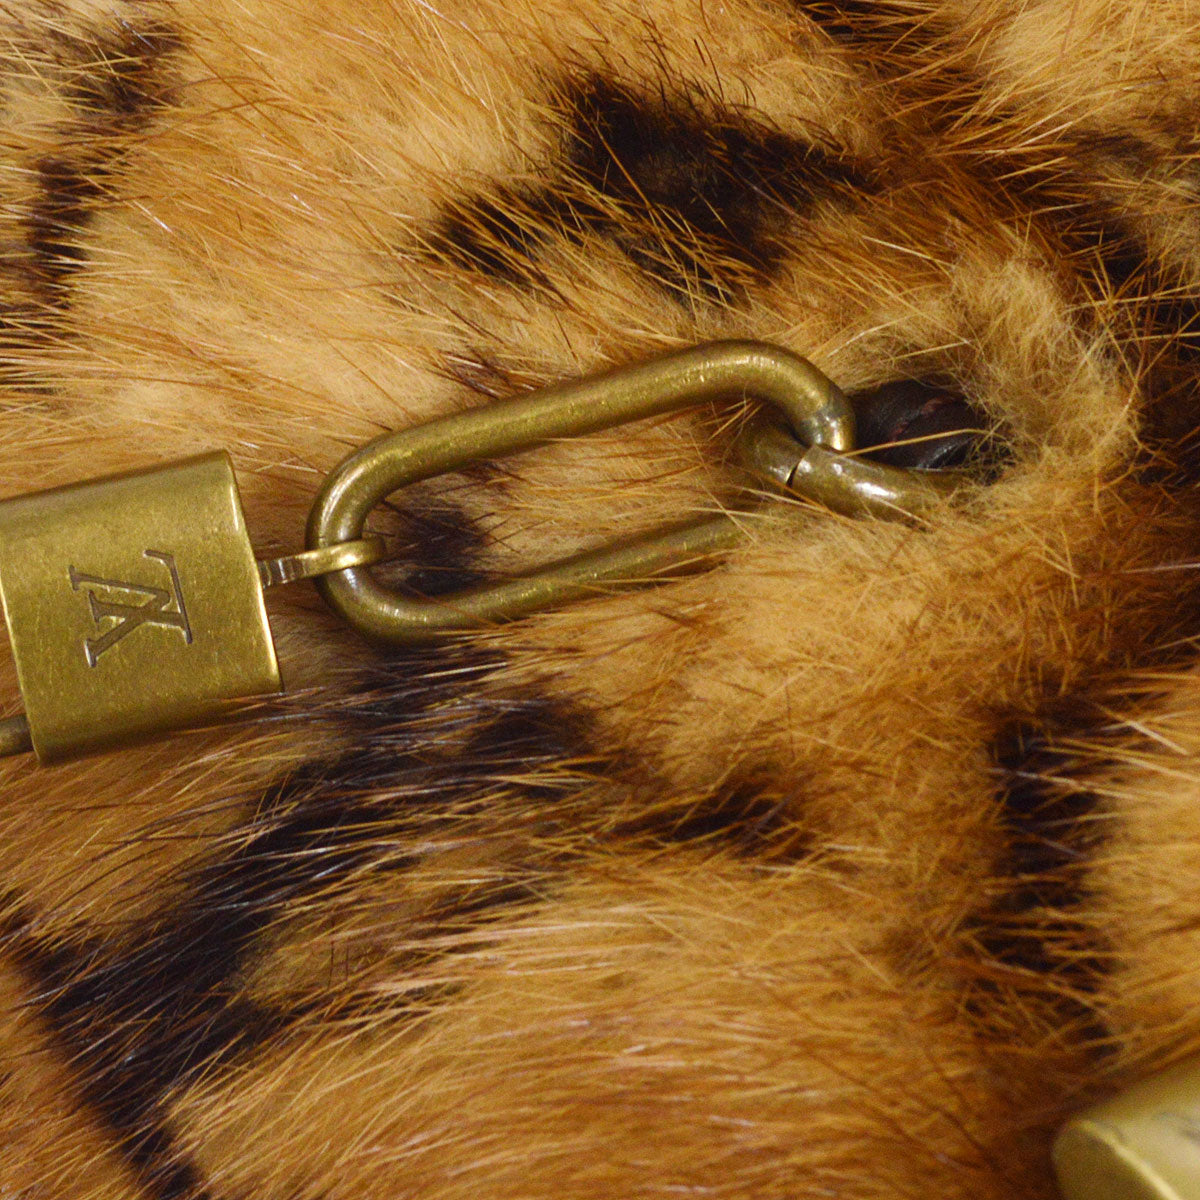 Pre-loved Louis Vuitton Papillon Leather Mini Bag – Vintage Muse Adelaide